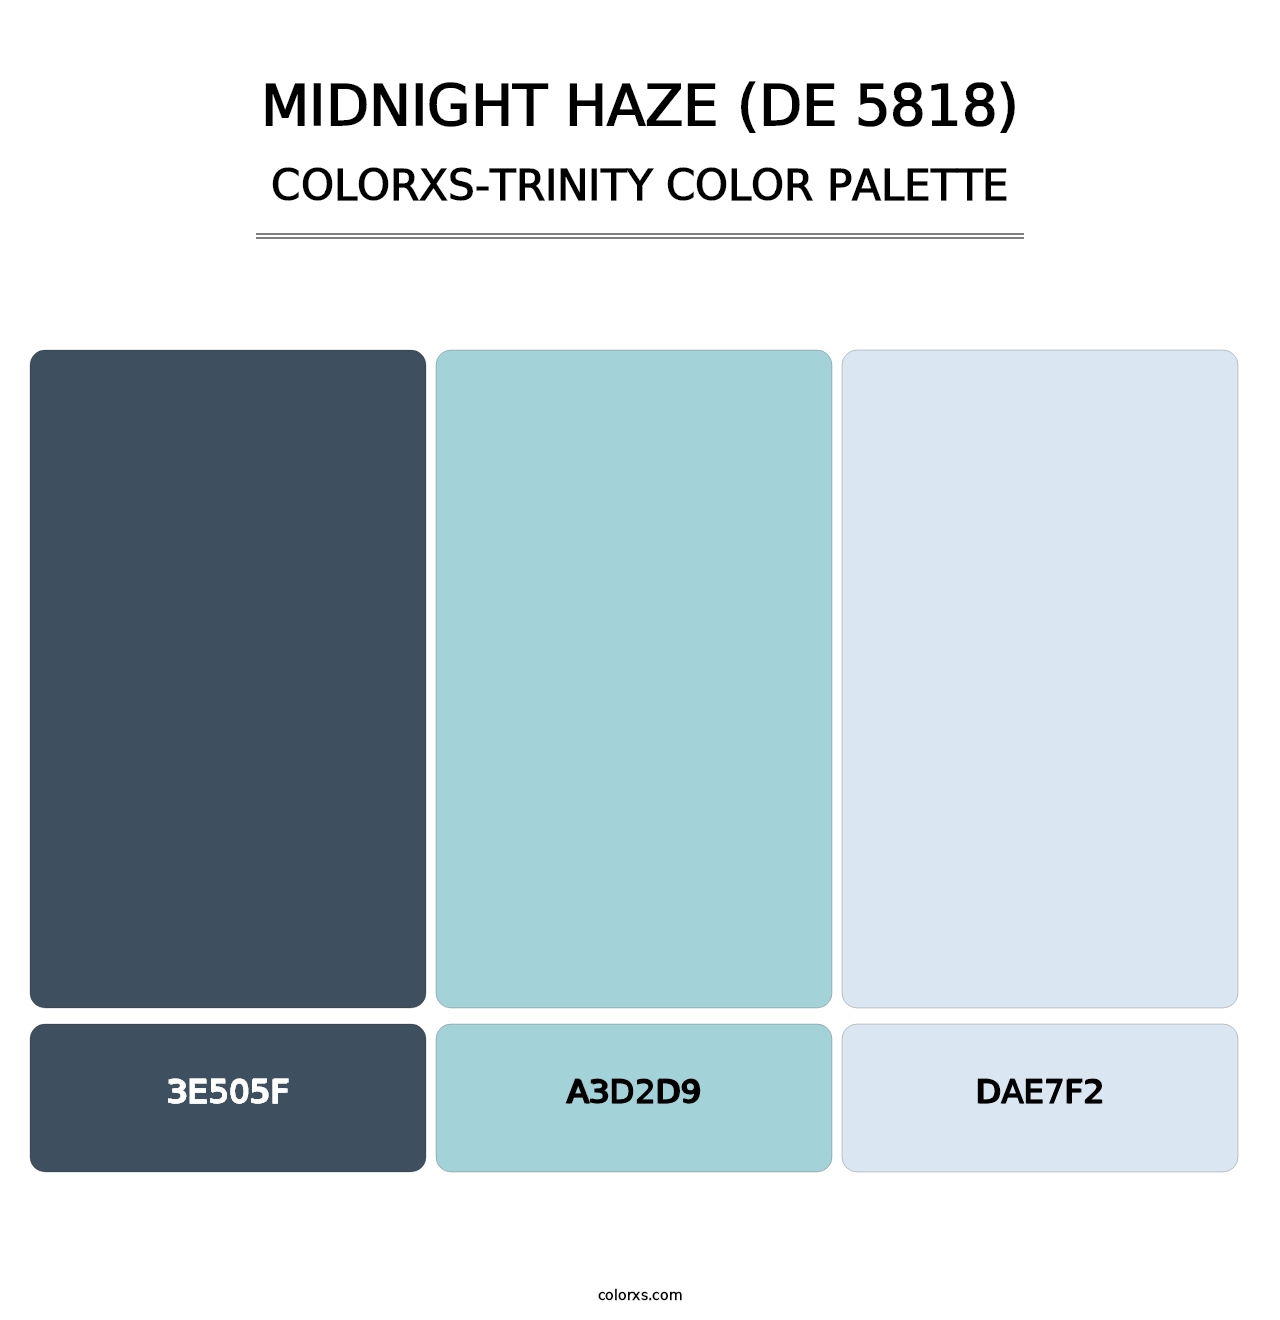 Midnight Haze (DE 5818) - Colorxs Trinity Palette